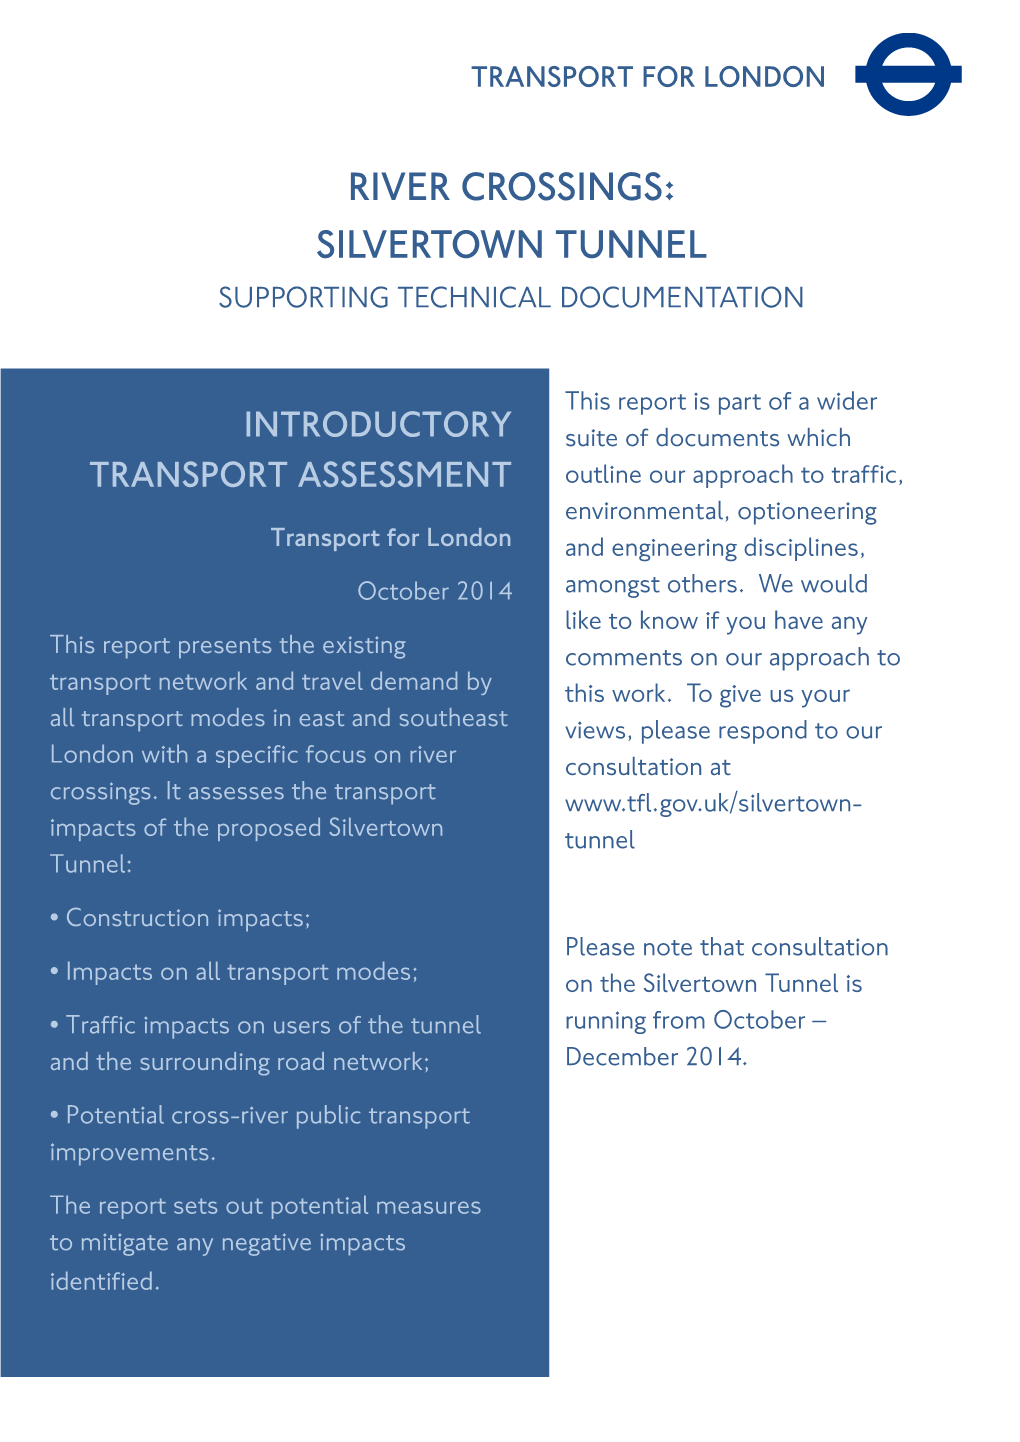 Silvertown Tunnel Transport Assessment